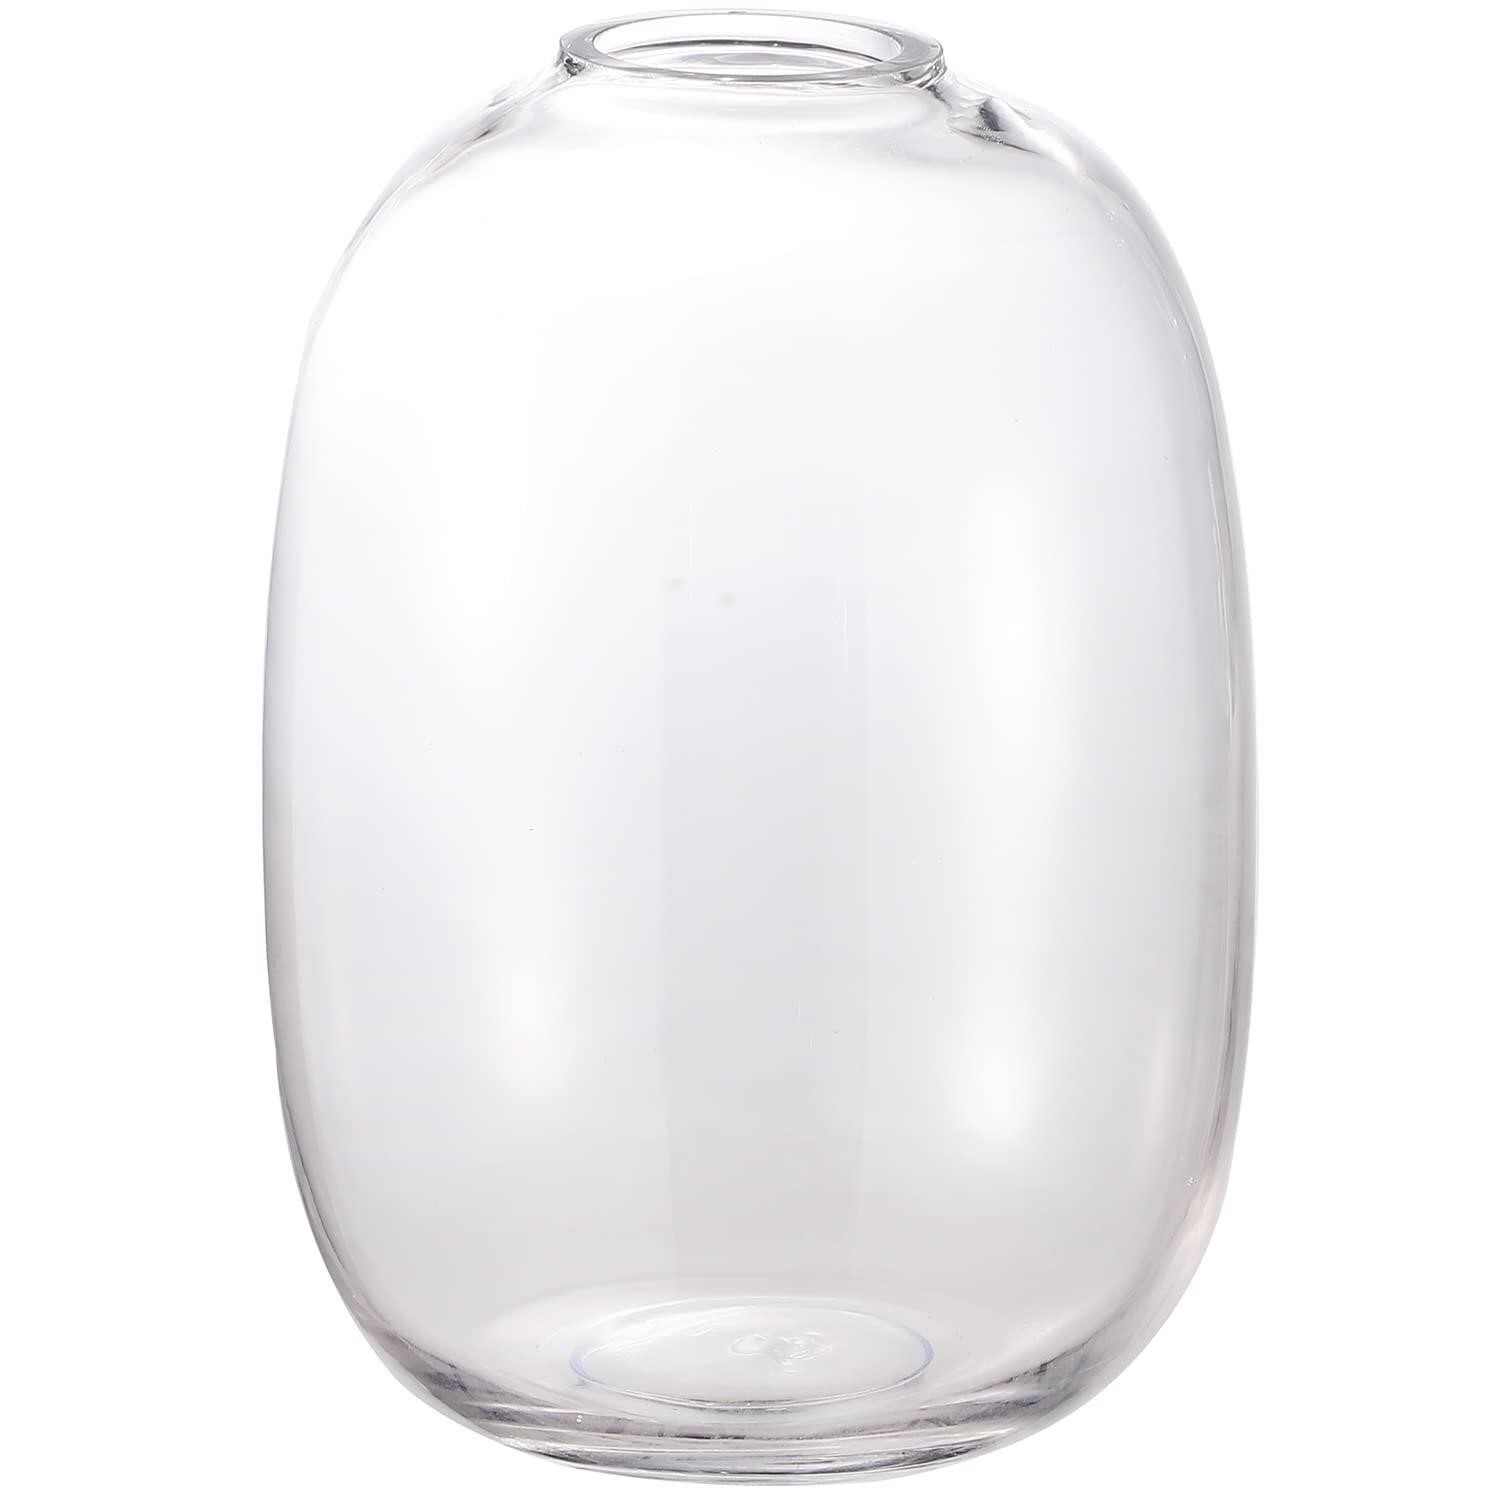 YANWE1 Clear Glass Vase, 10 Inches Large Glass Vas